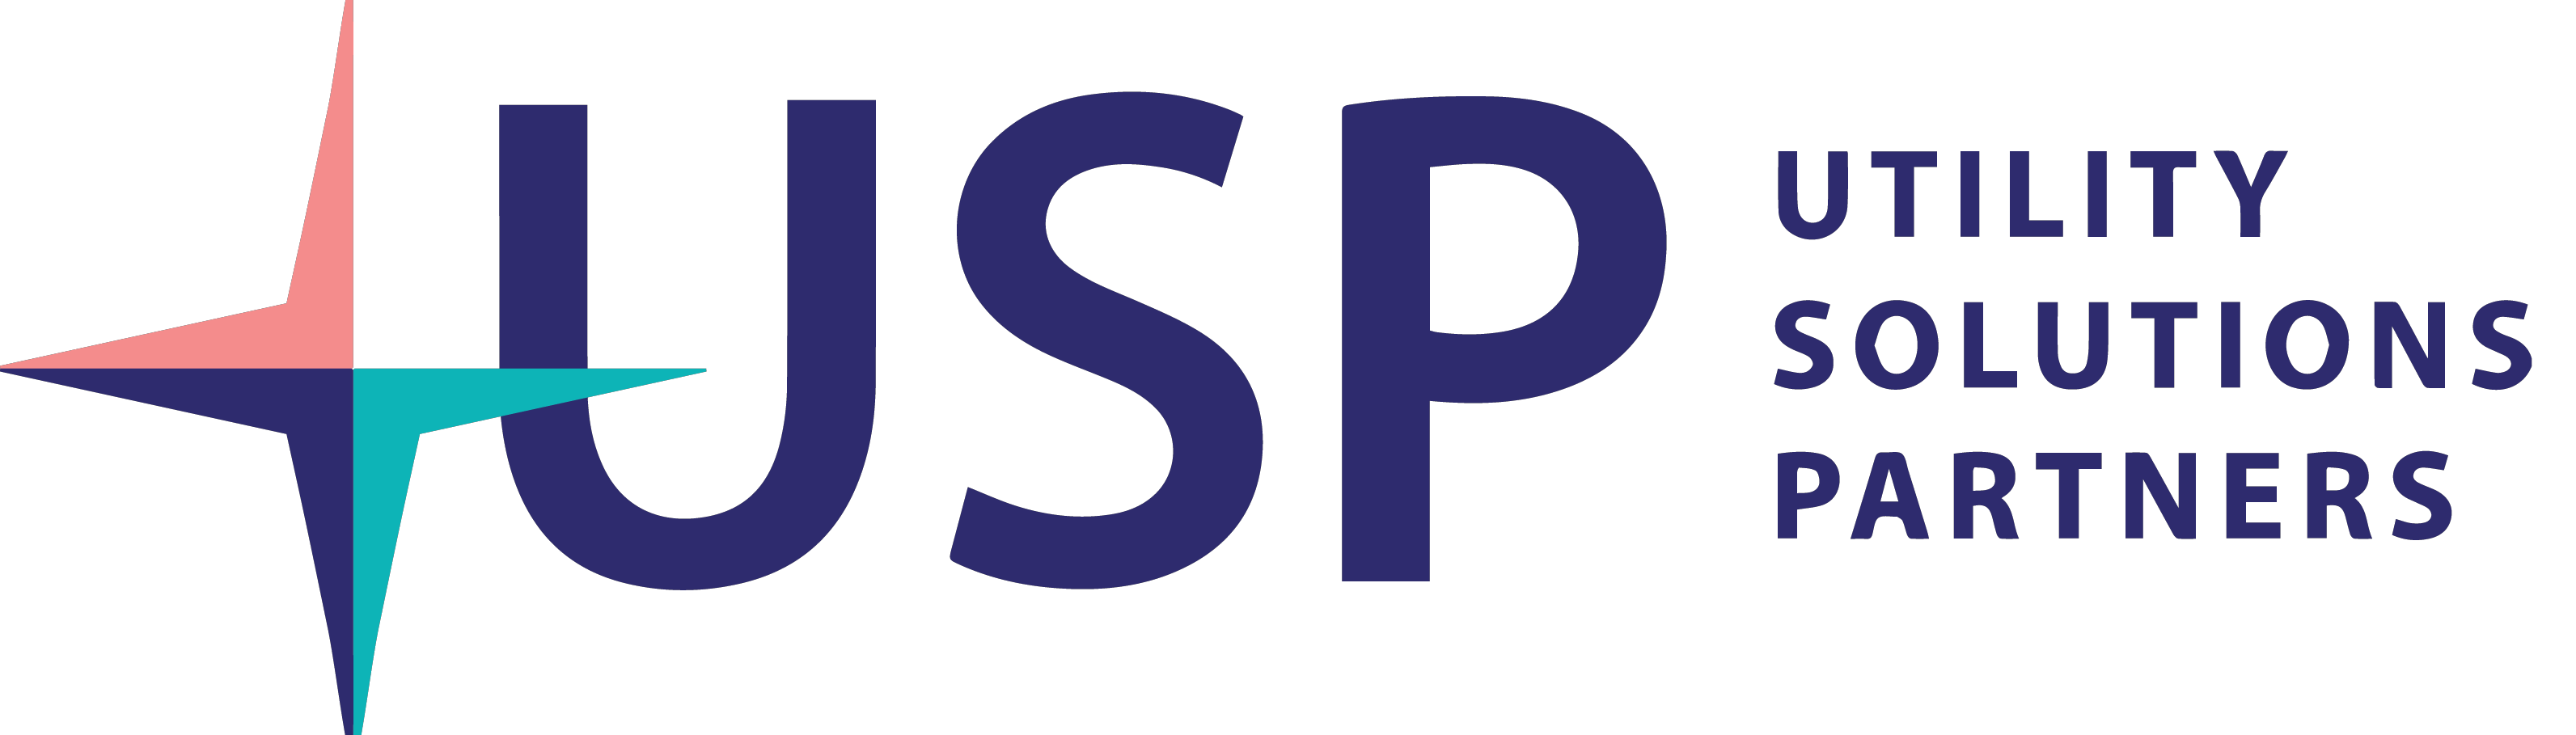 USP logo.